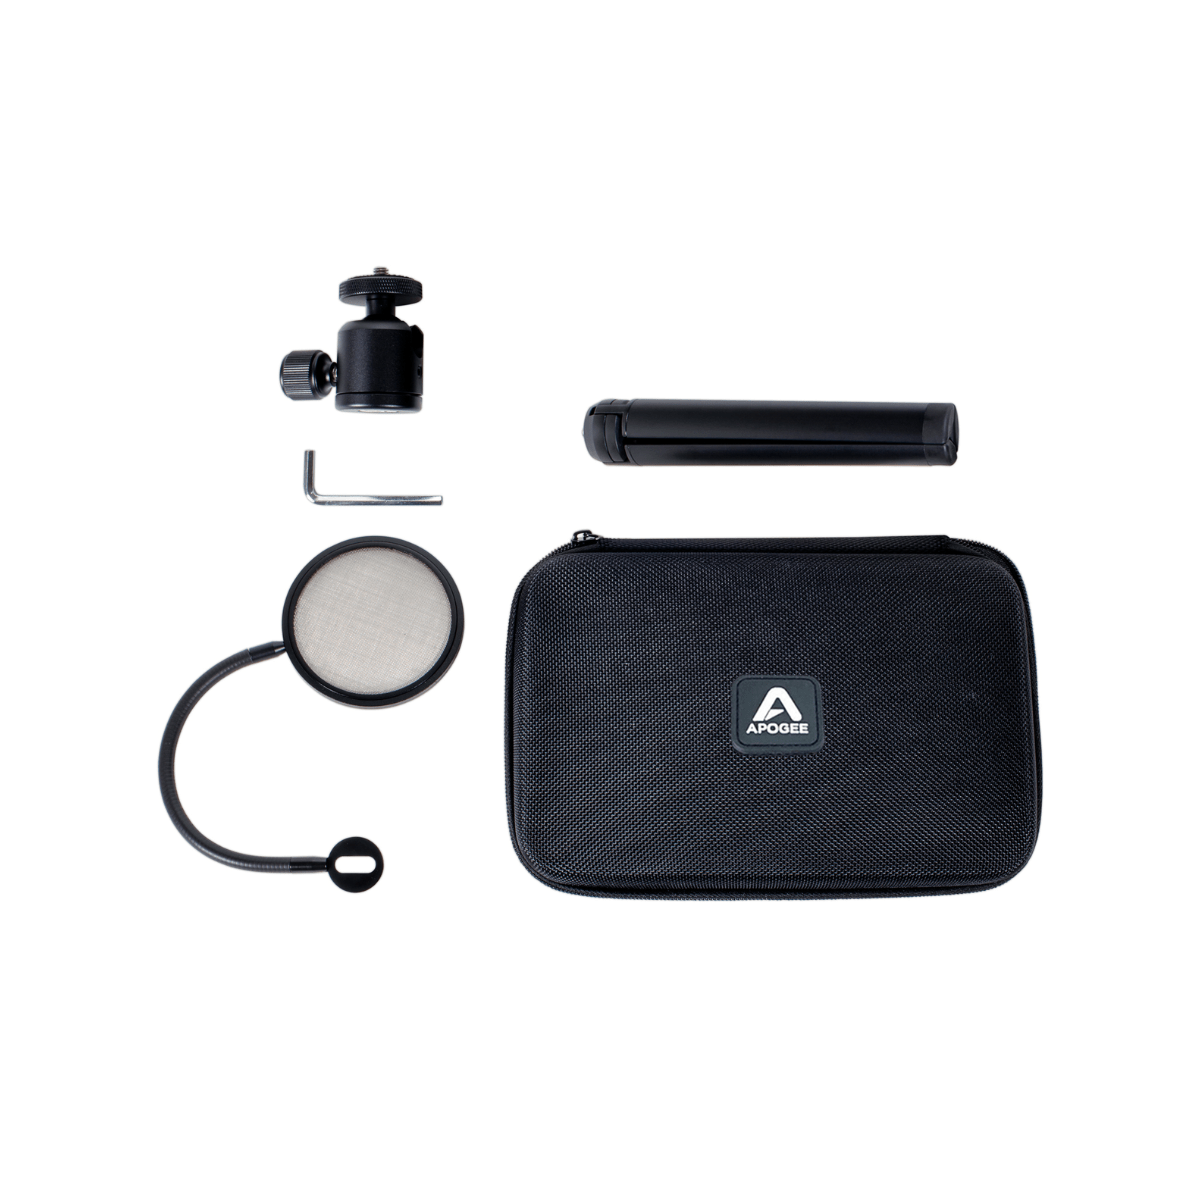 Apogee Premium Microphone Accessories Bundle